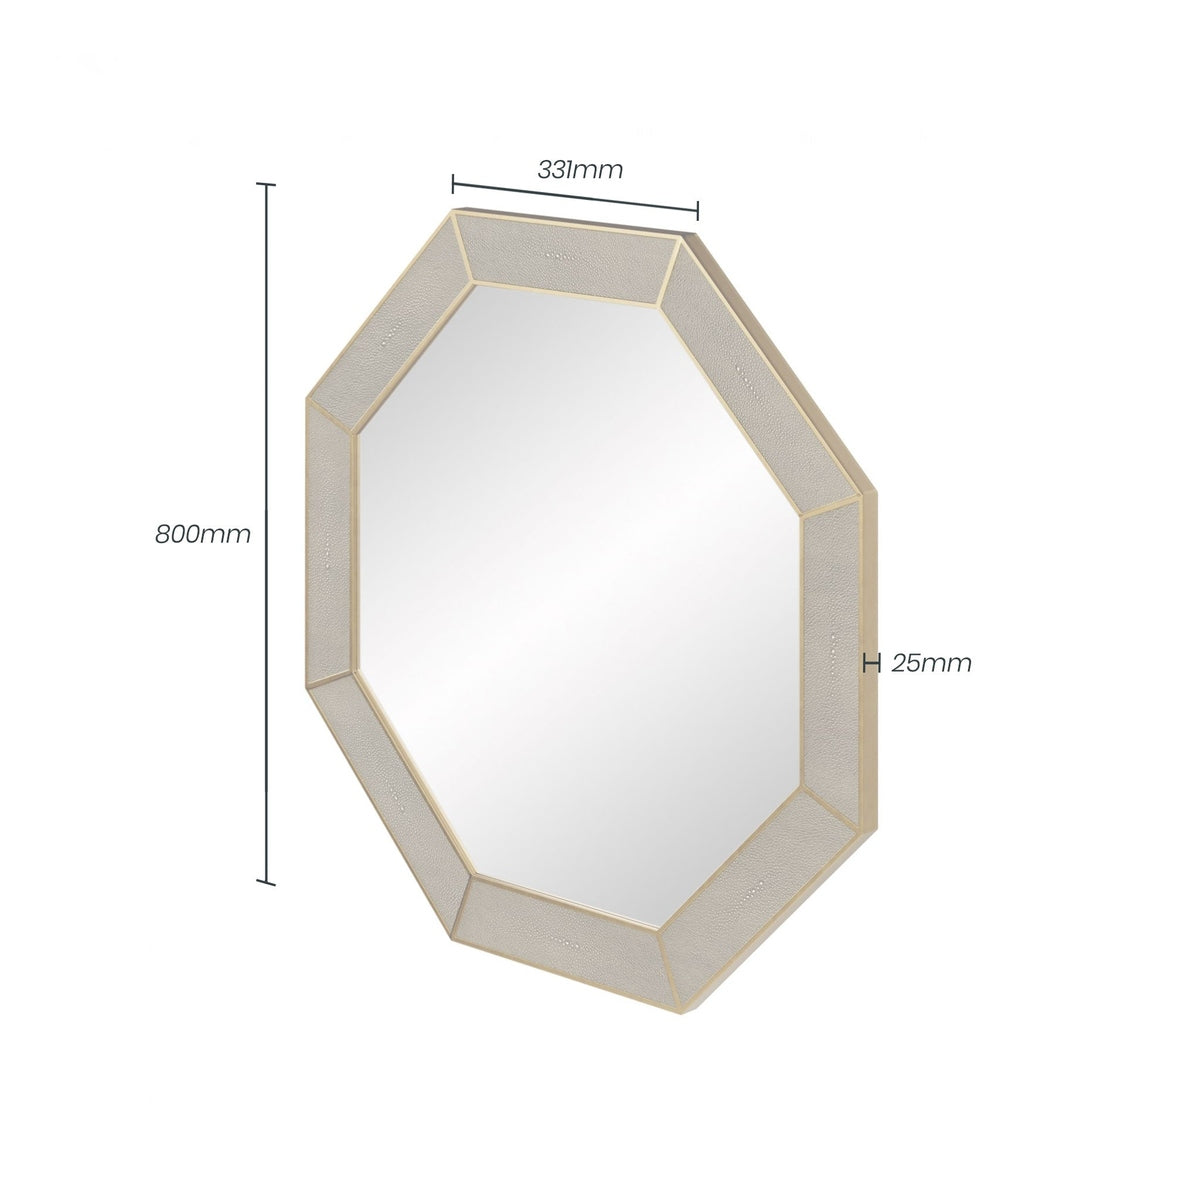 DI Designs Hampton Octagon Wall Mirror - Grey Shagreen